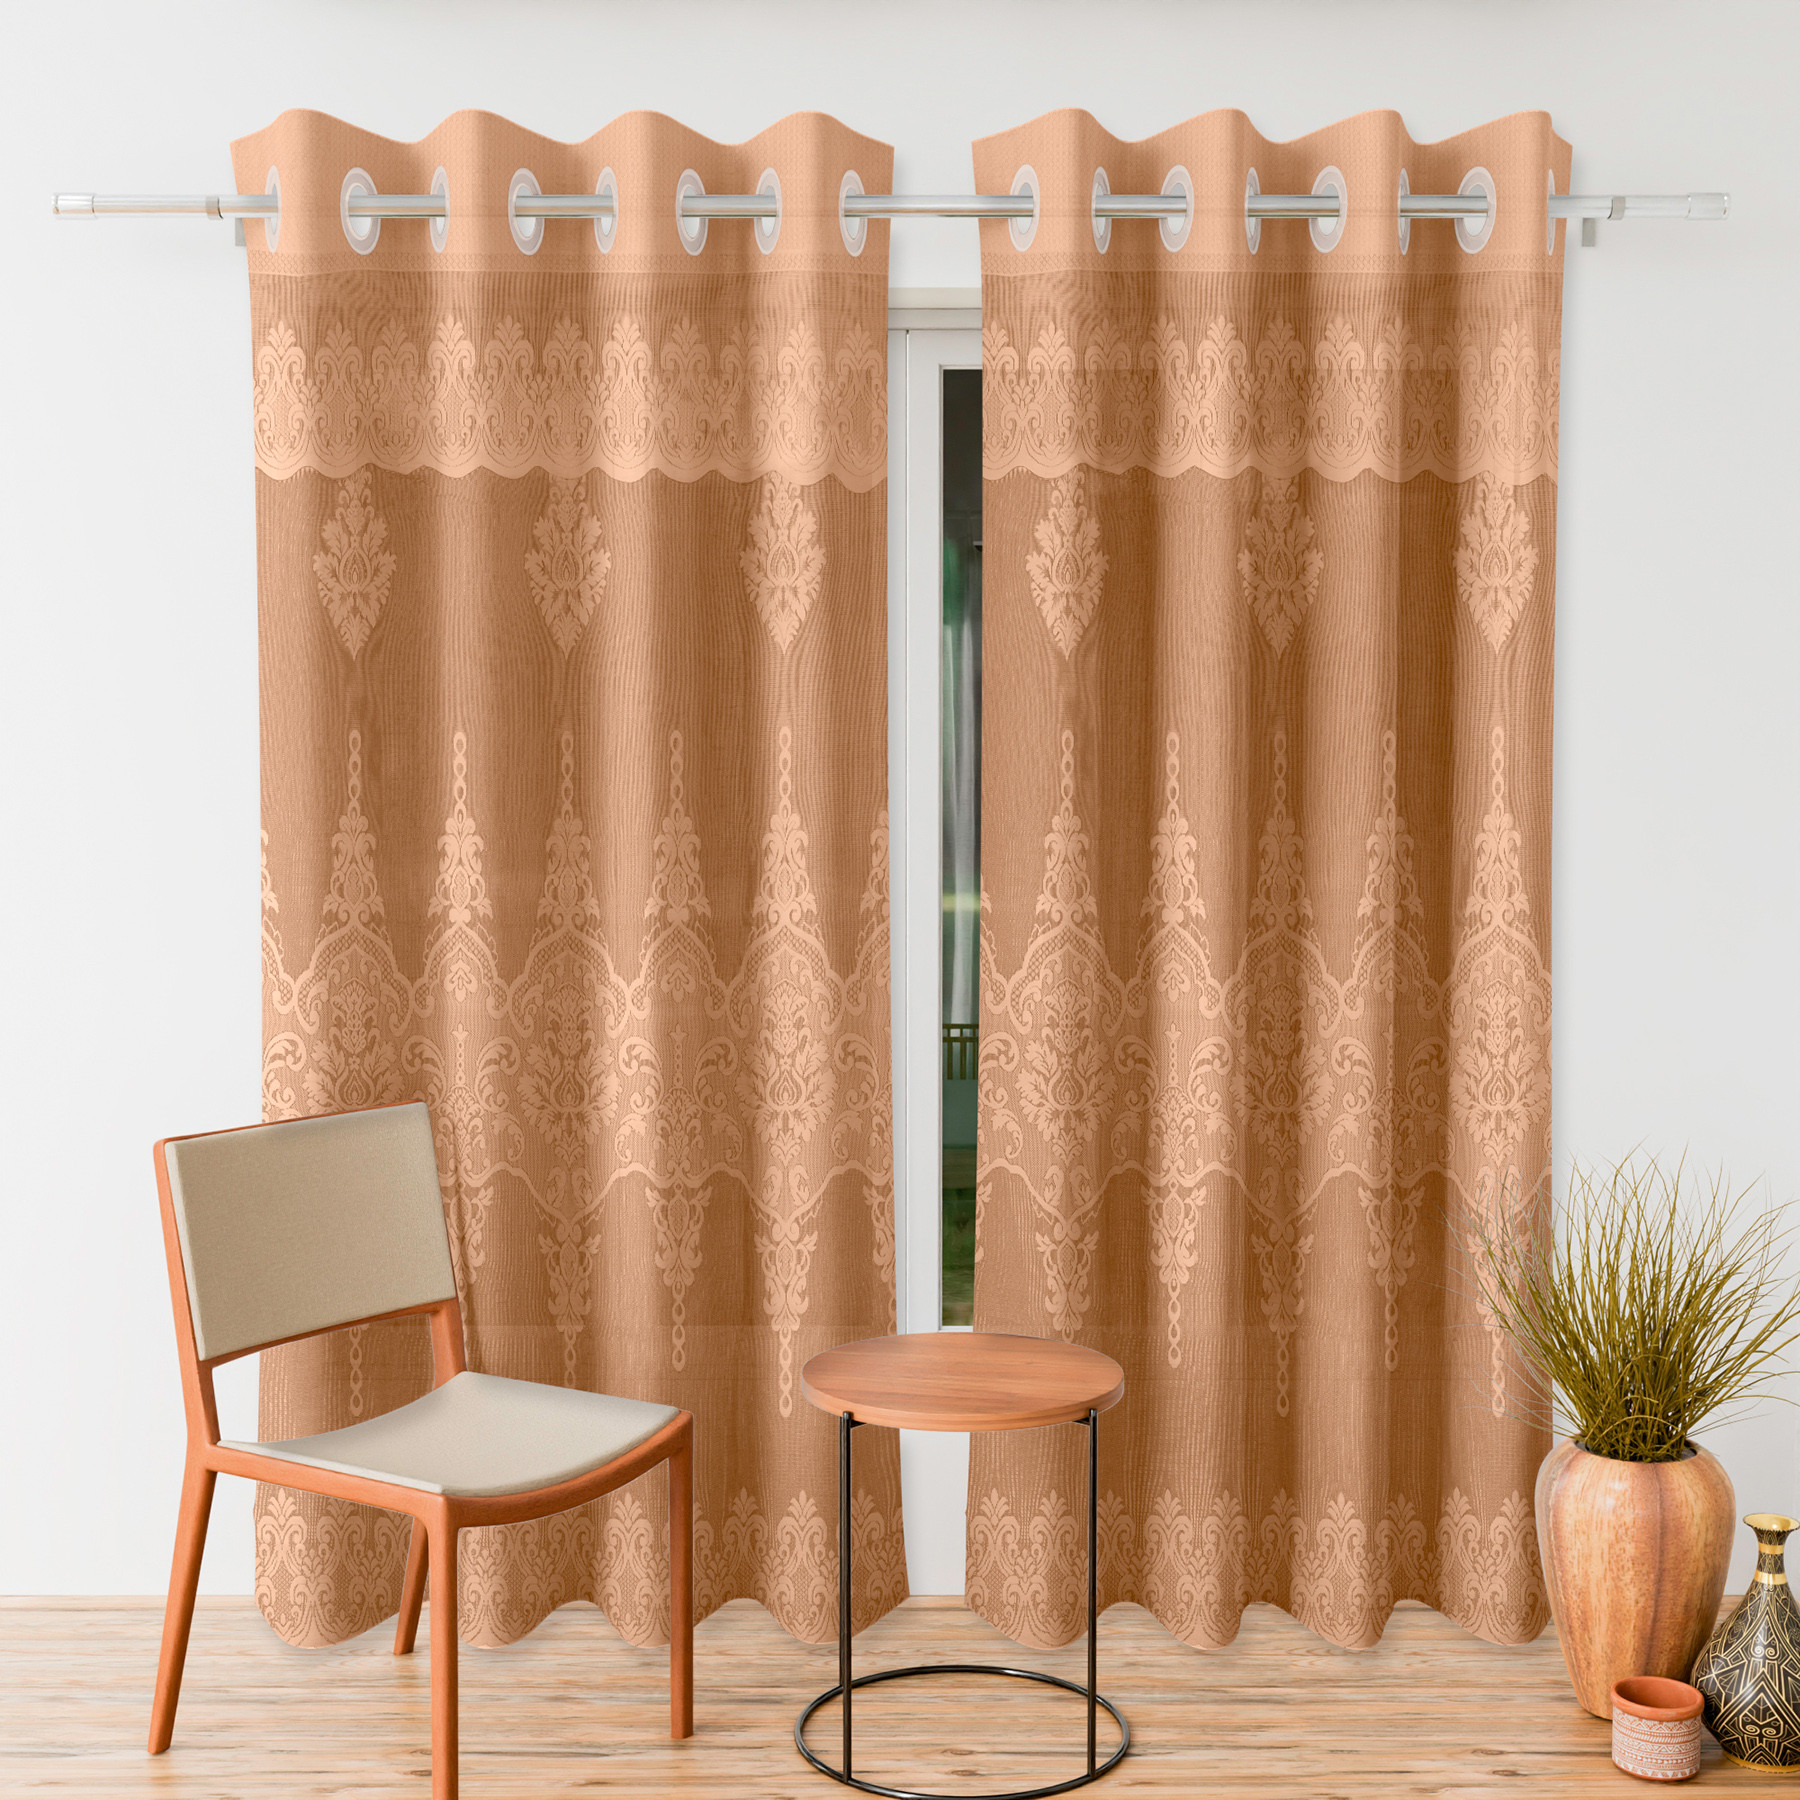 Kuber Industries Door Curtain | Darkening Door Curtains | Premium Drapes for Bedroom | Sheer Curtain with 8 Rings | Parda for Living Room | Net Frill Door Curtain | 7 Ft | SY15ZZ | Golden